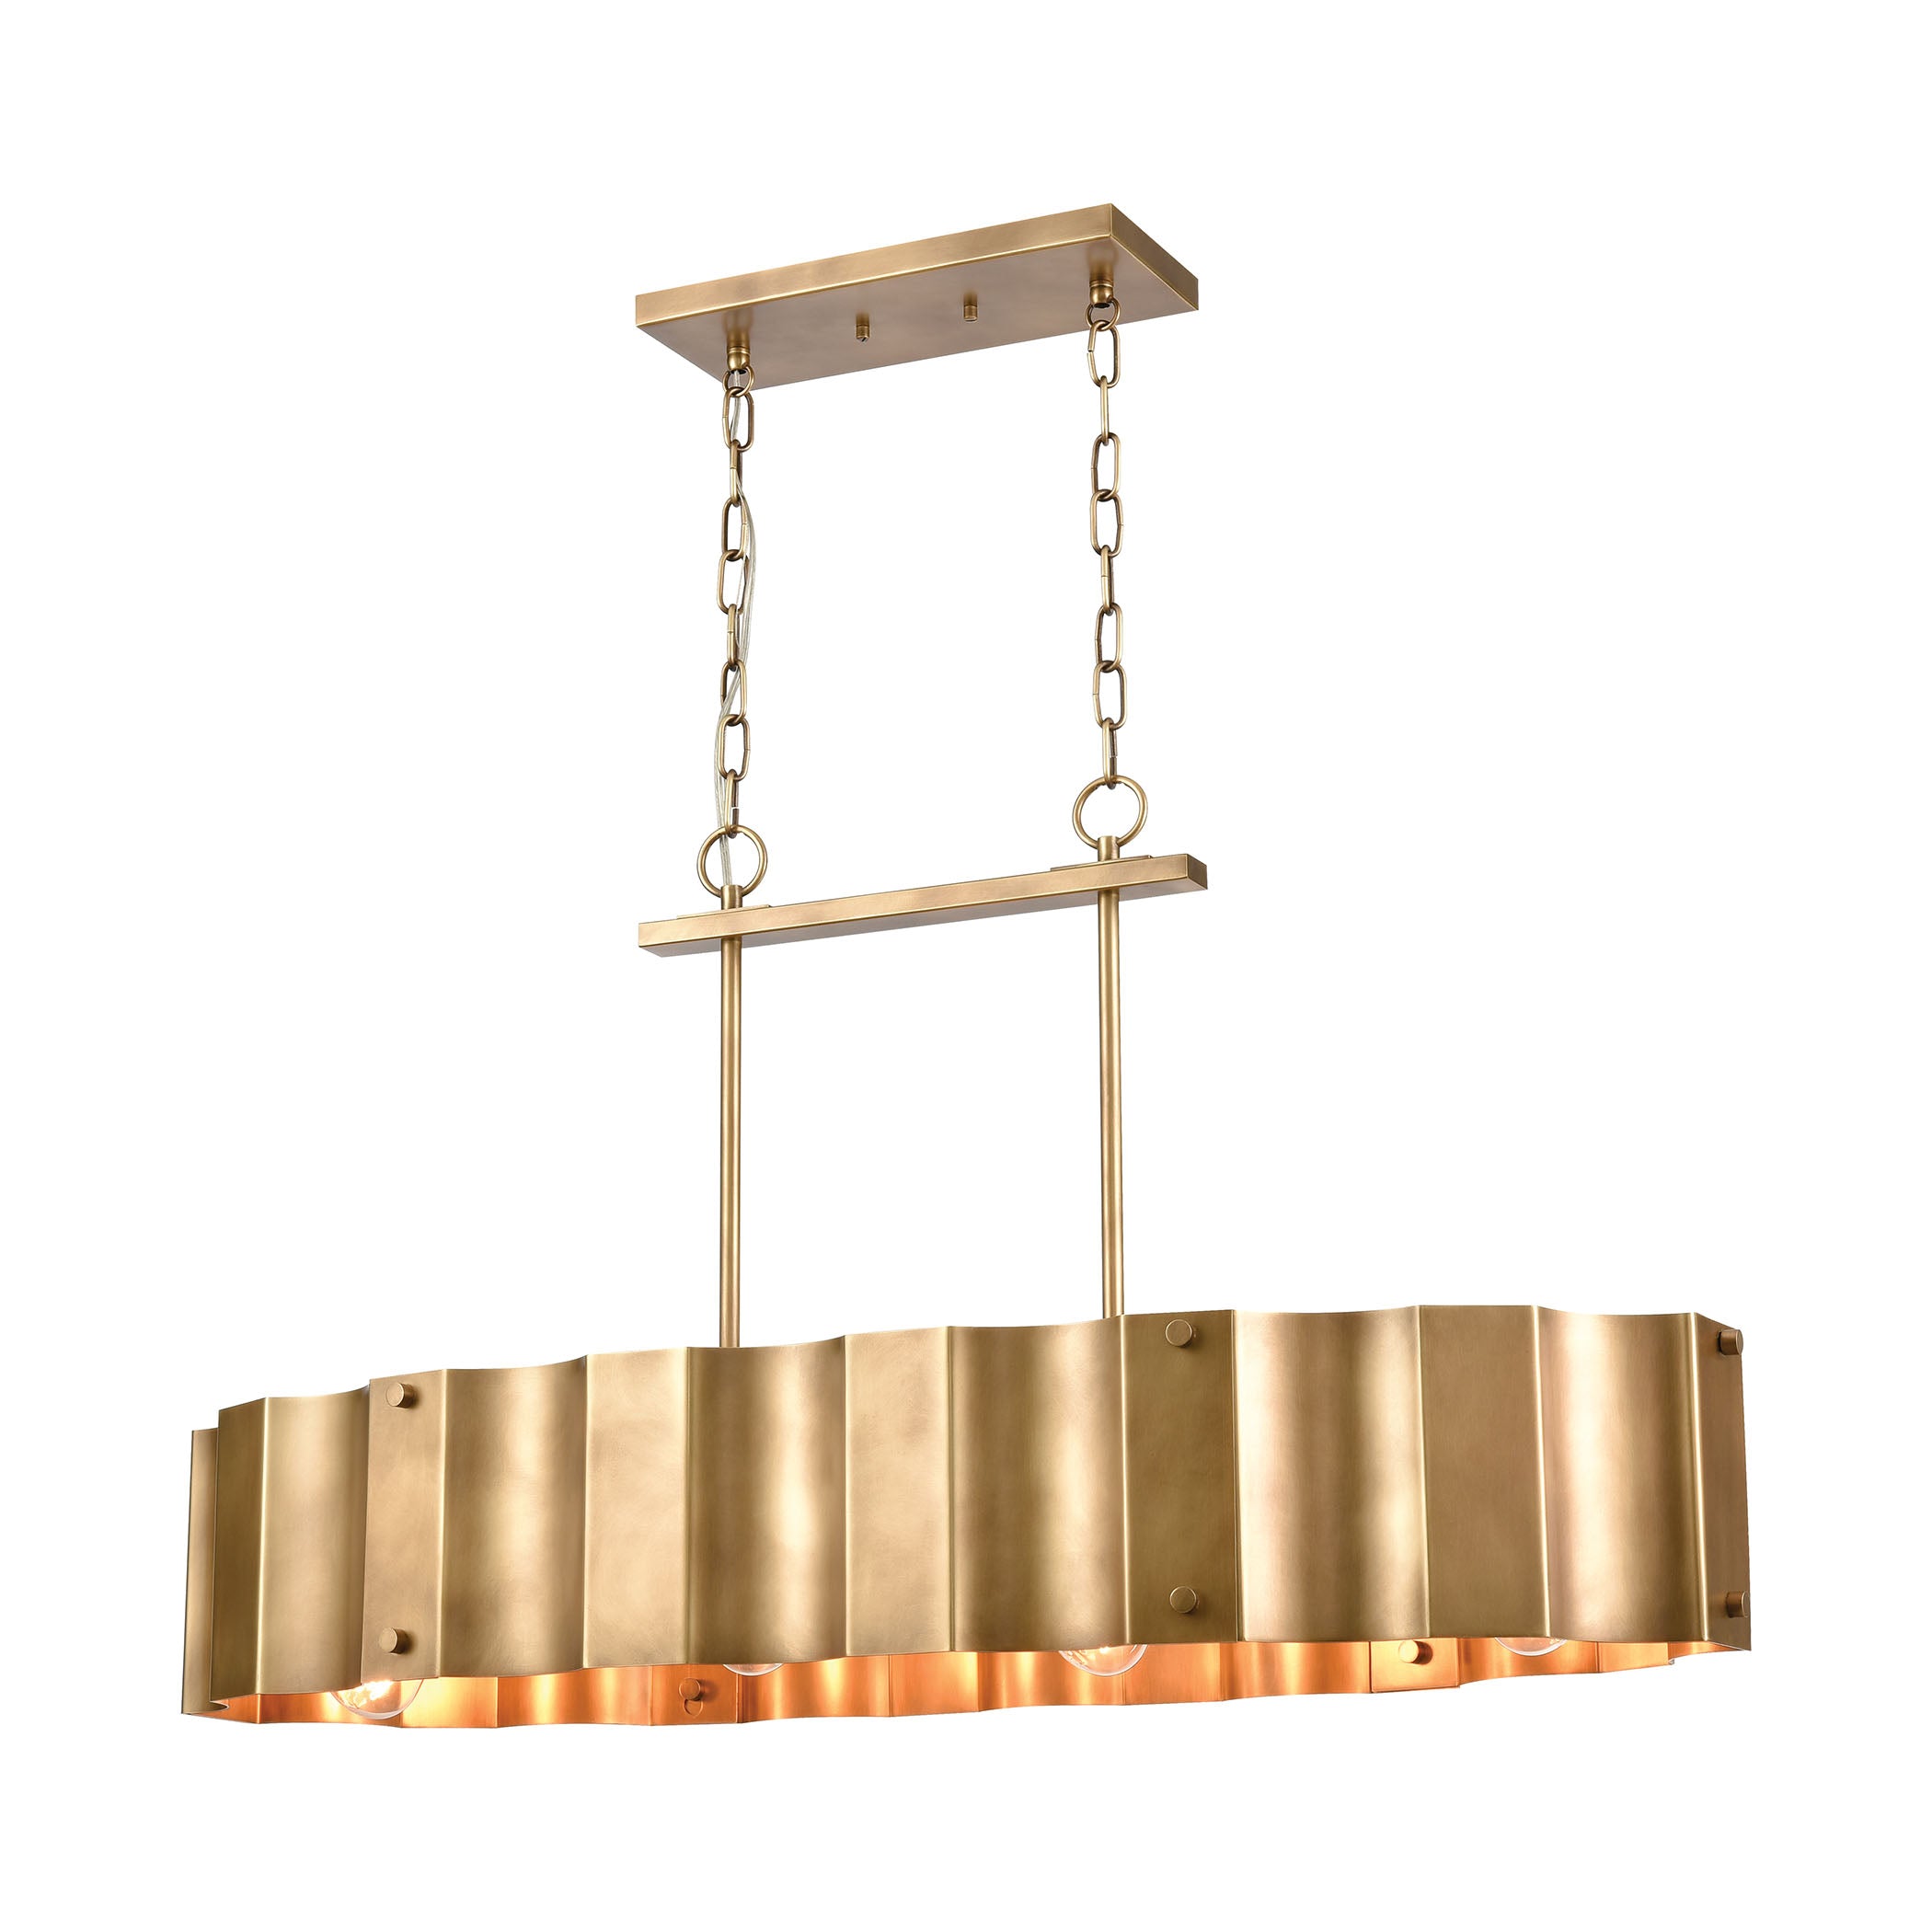 ELK Lighting 89068/4 Clausten 4-Light Island Light in Natural Brass with Natural Brass Metal Shade